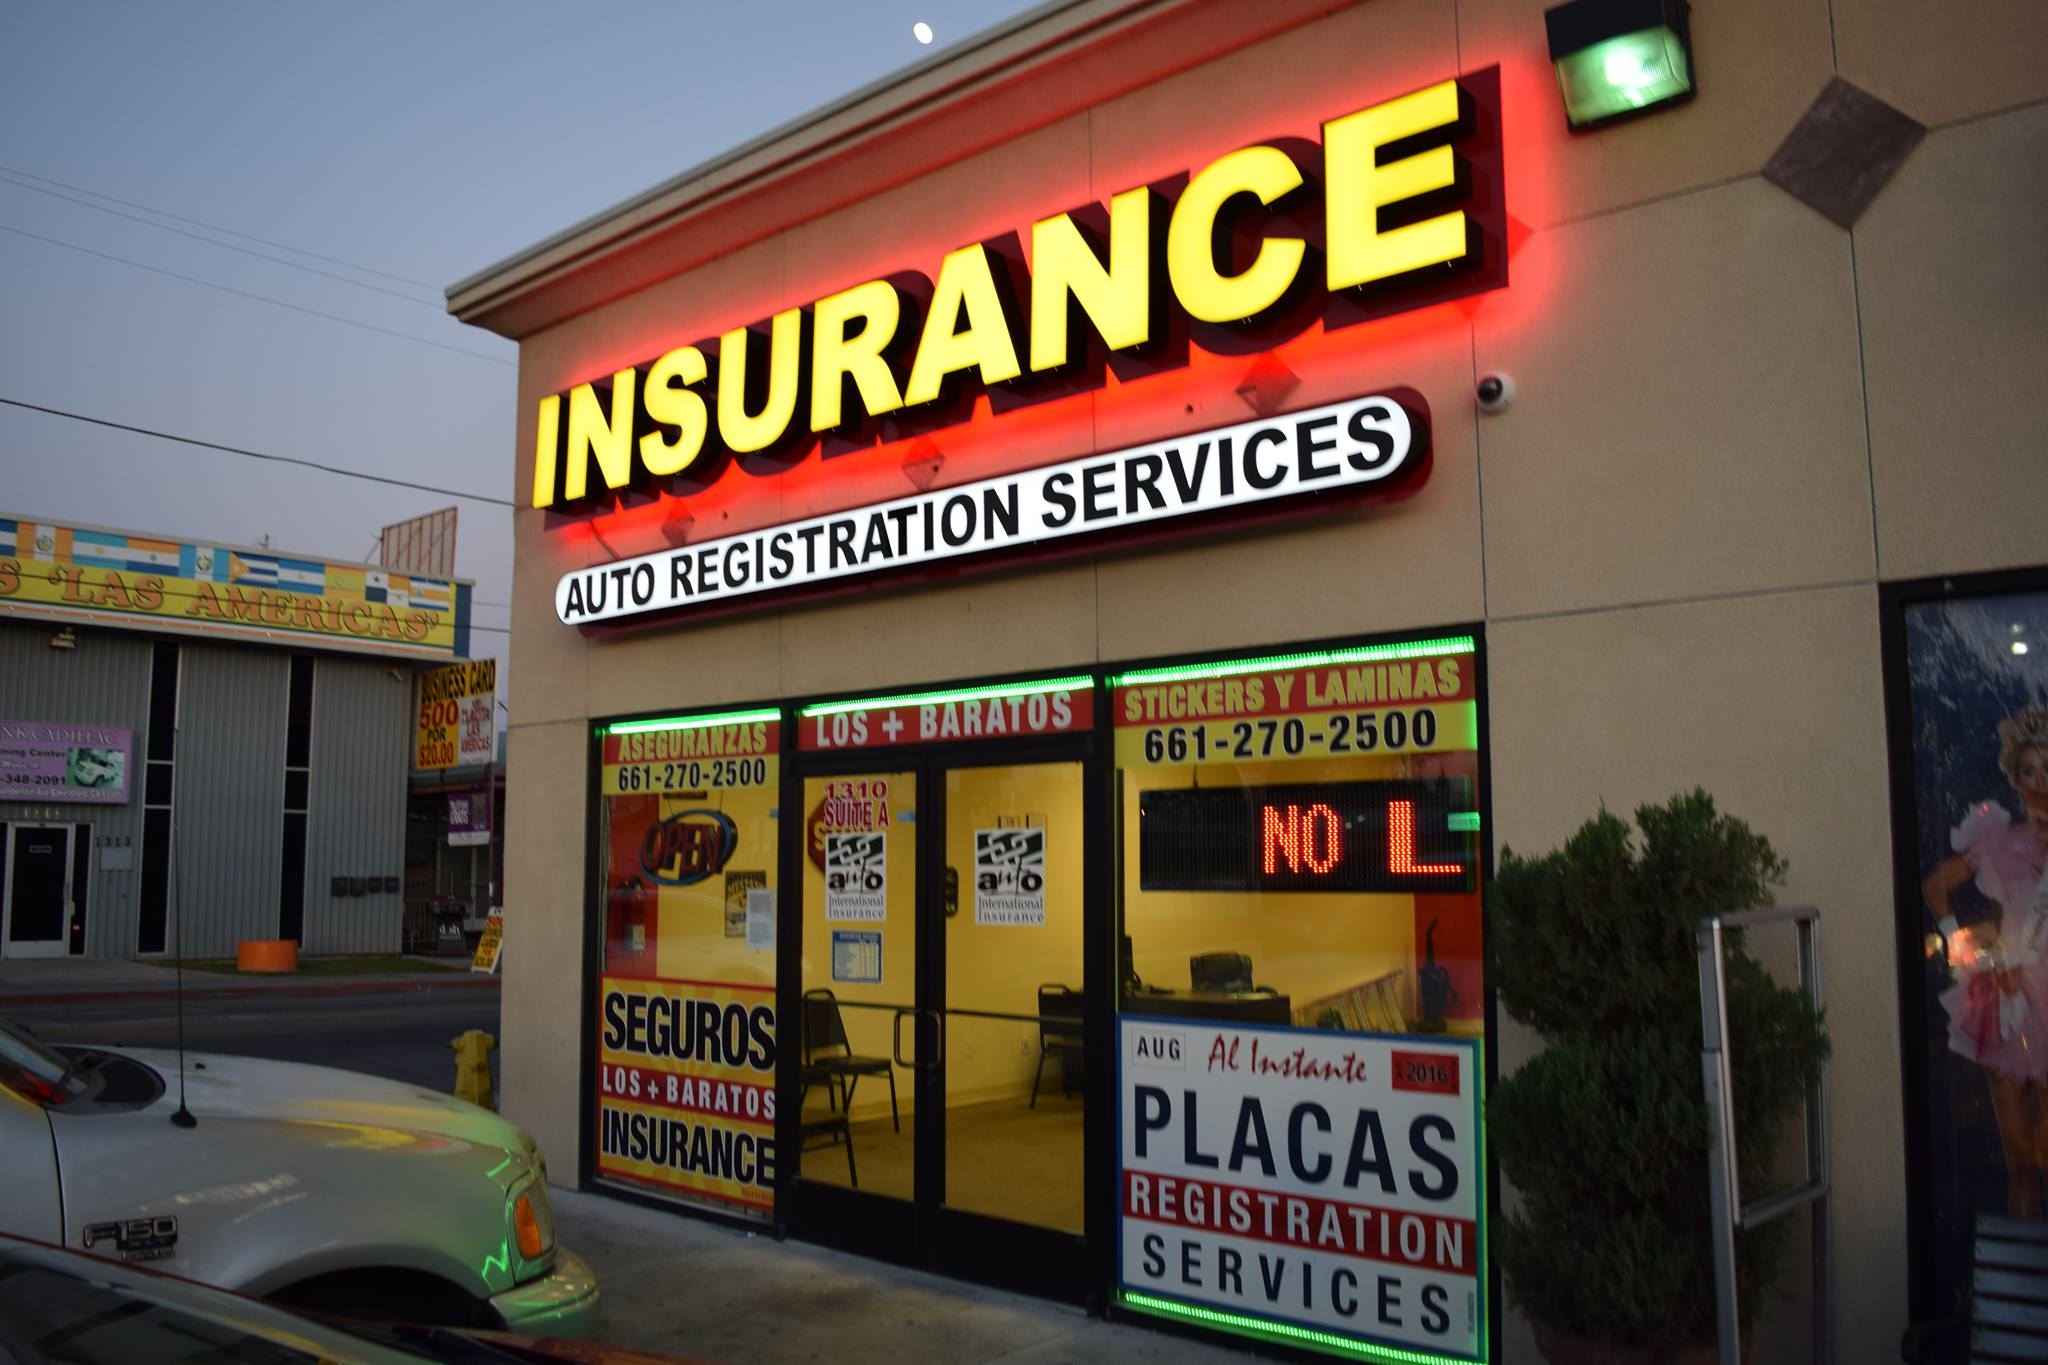 Auto International Insurance & DMV Services in Bakersfield. 